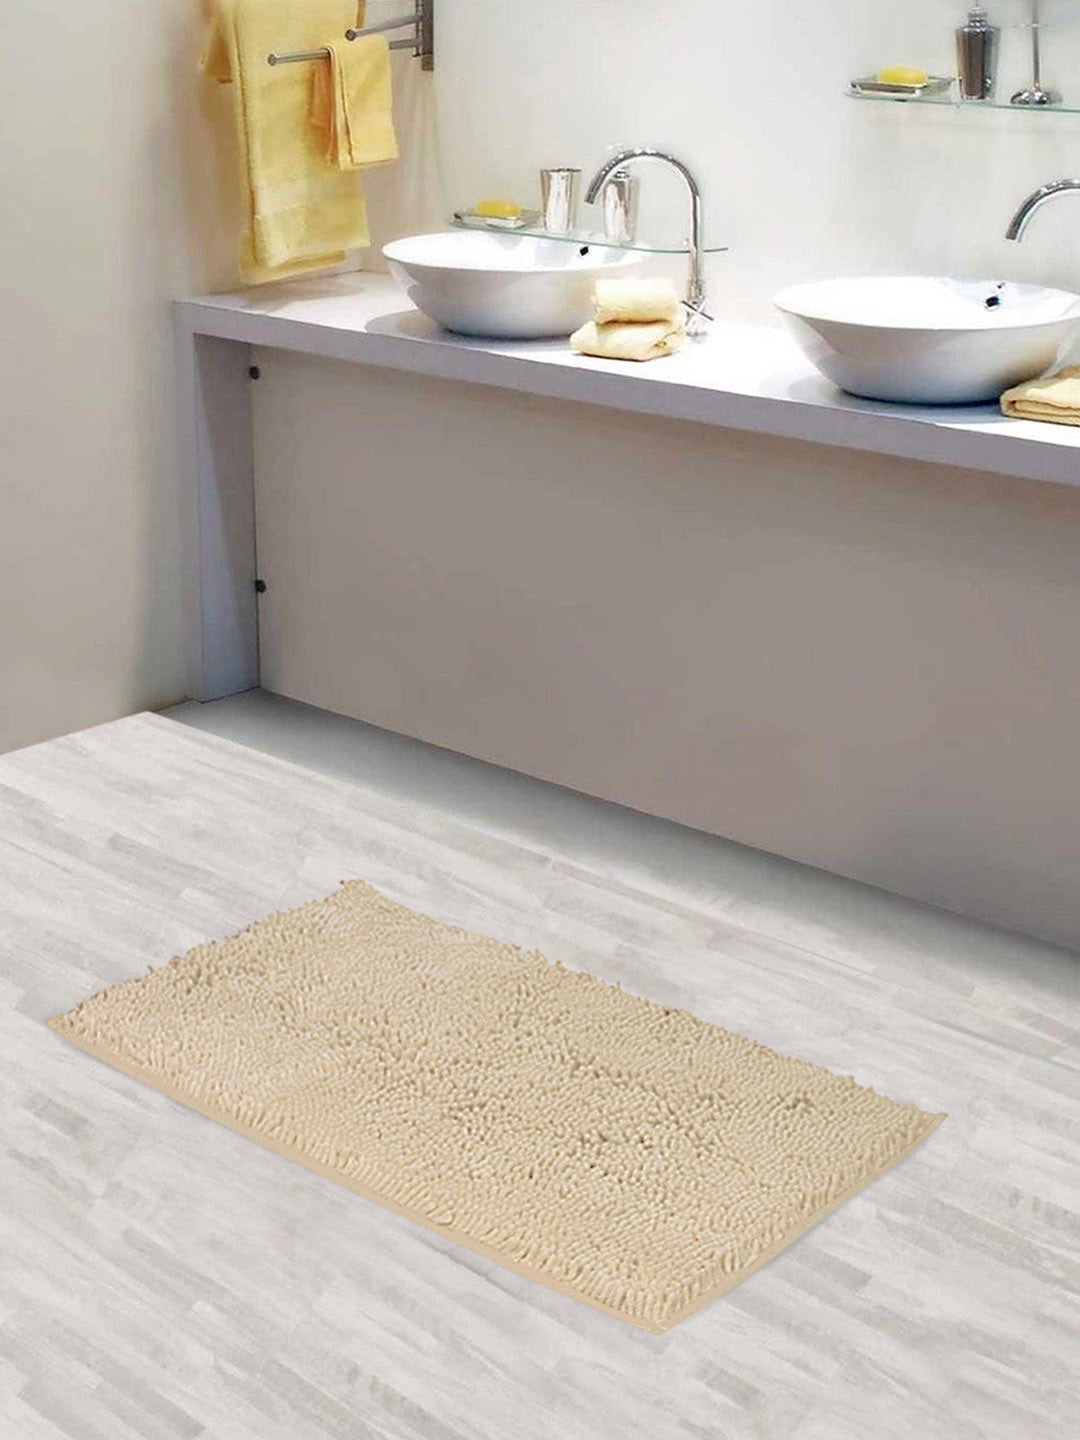 Lushomes Bathroom Mat, 2200 GSM Floor, bath mat Mat with High Pile Microfiber, anti skid mat for bathroom Floor, bath mat Non Slip Anti Slip, Premium Quality (12 x 18 Inch, Single Pc, Ivory)